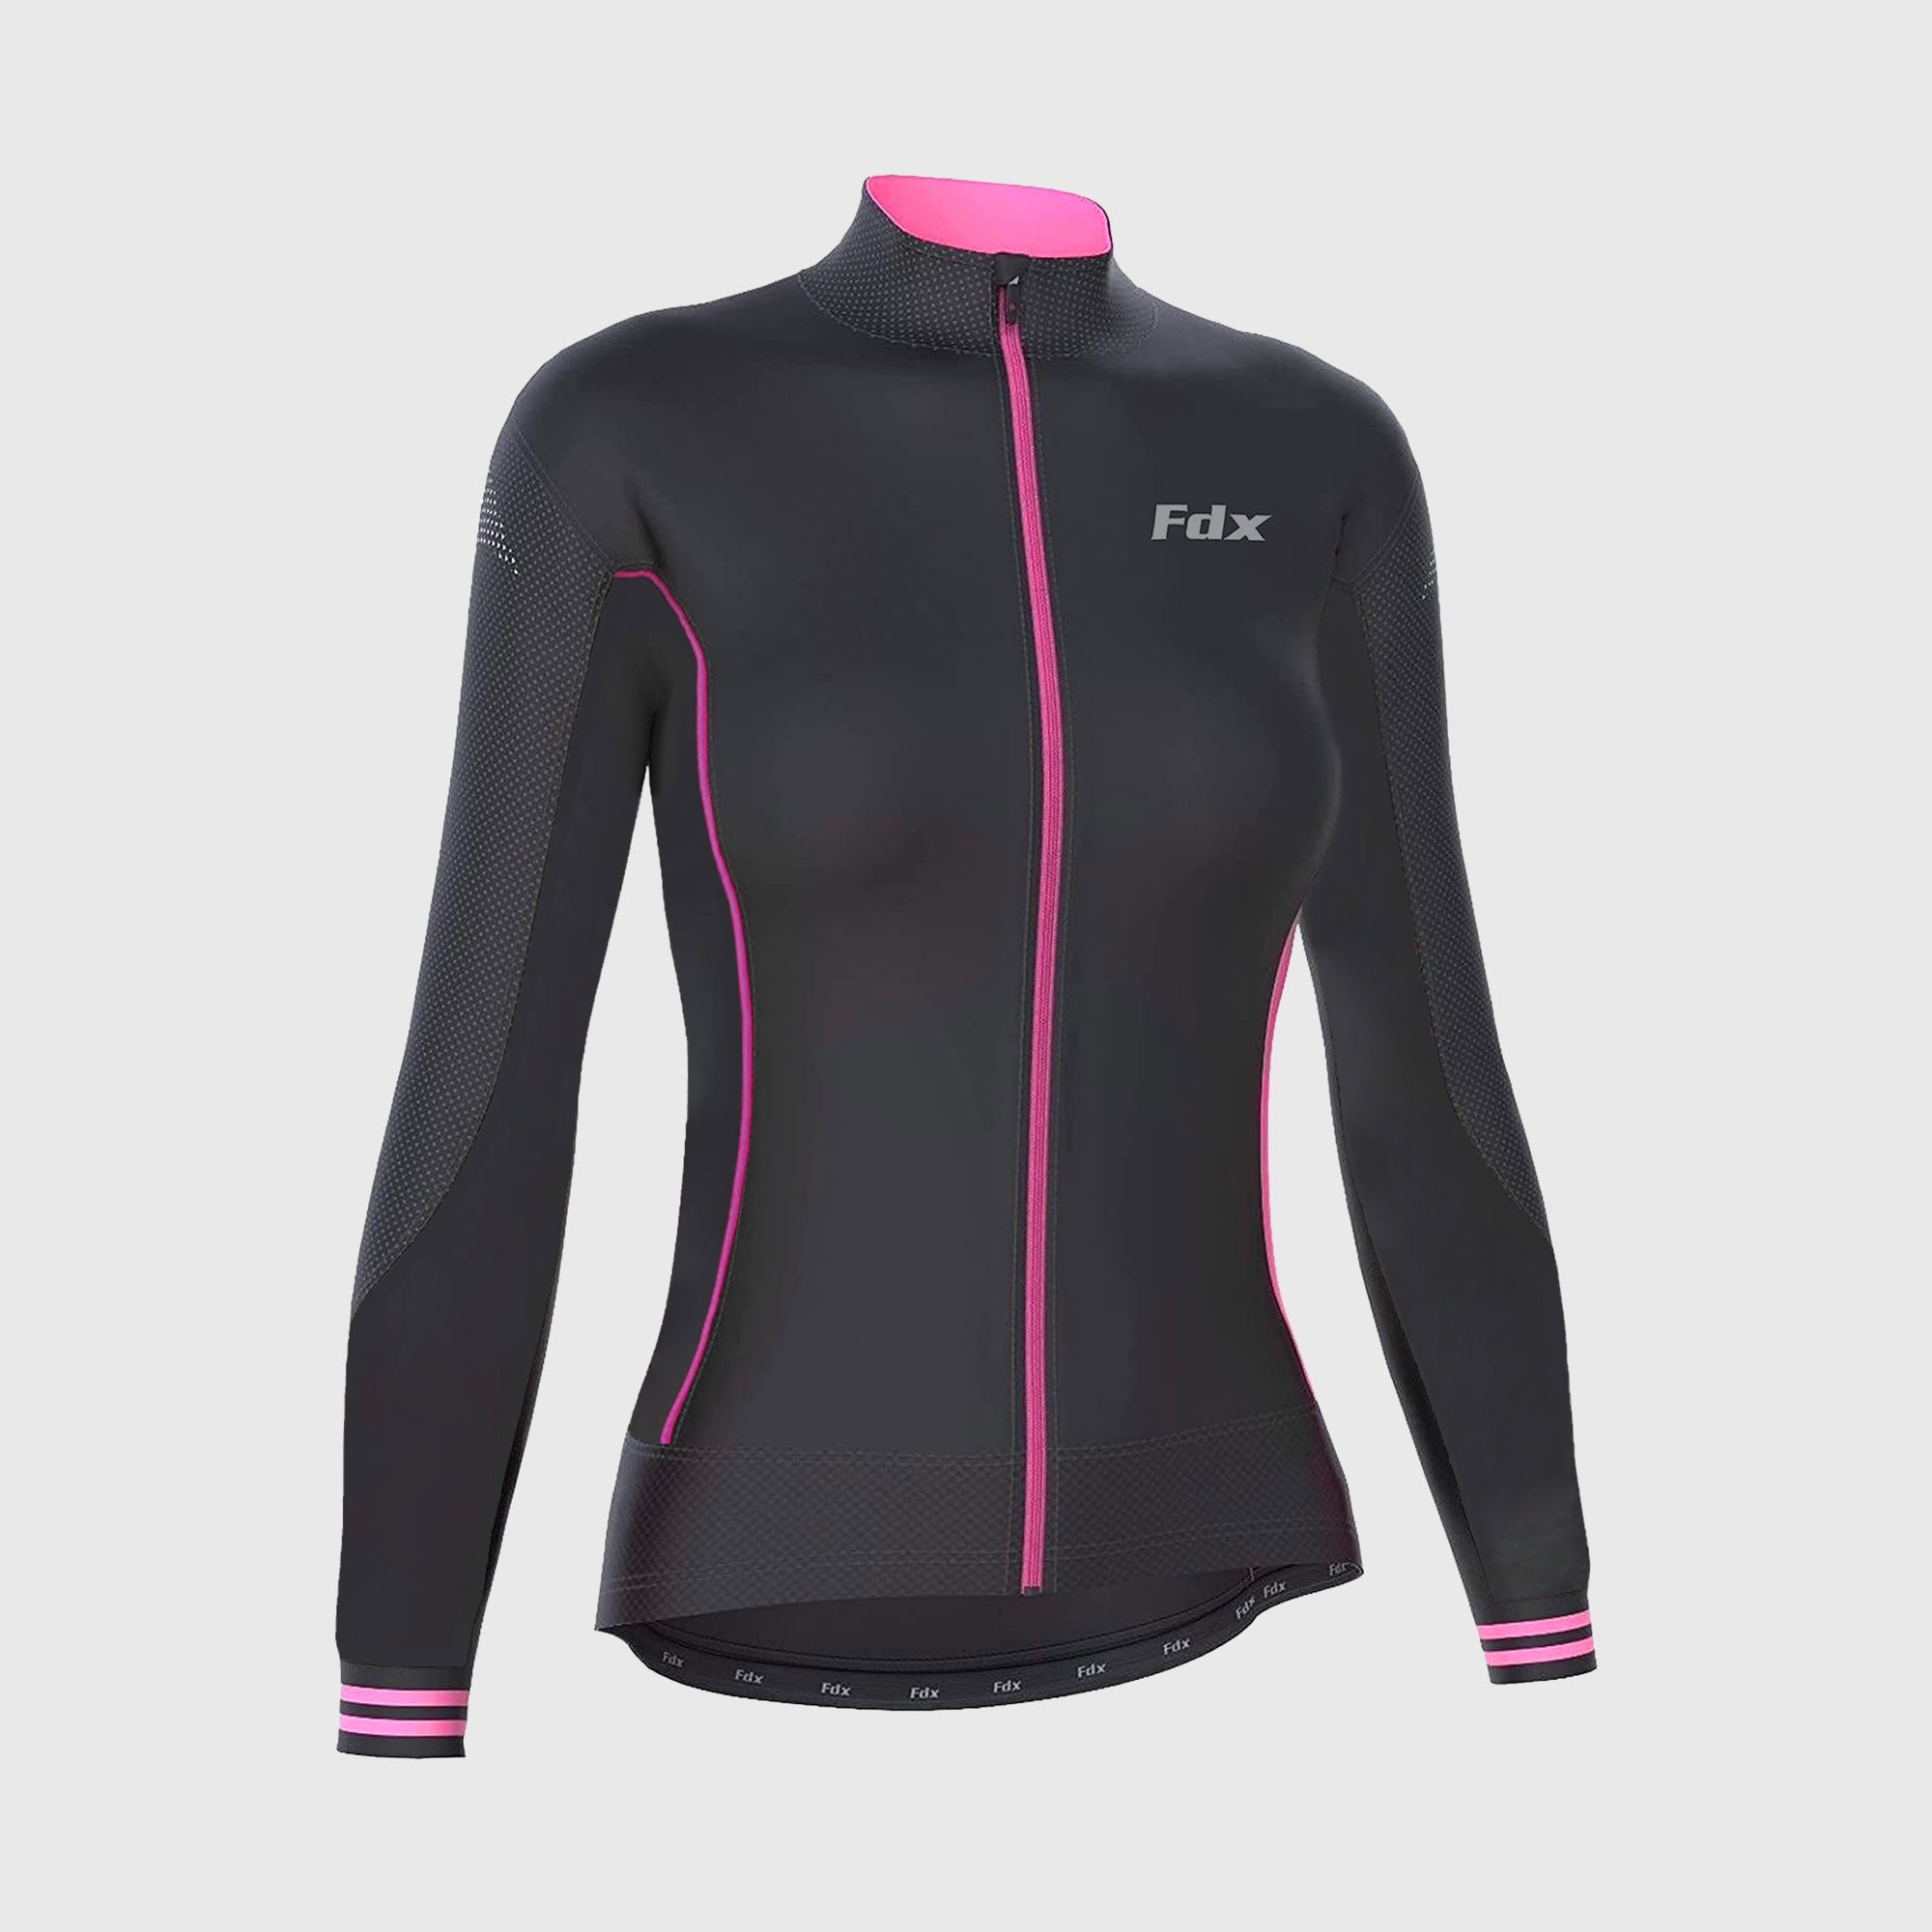 Fdx Propex Pink Women's Soft-Shell Wind stopper Jackets